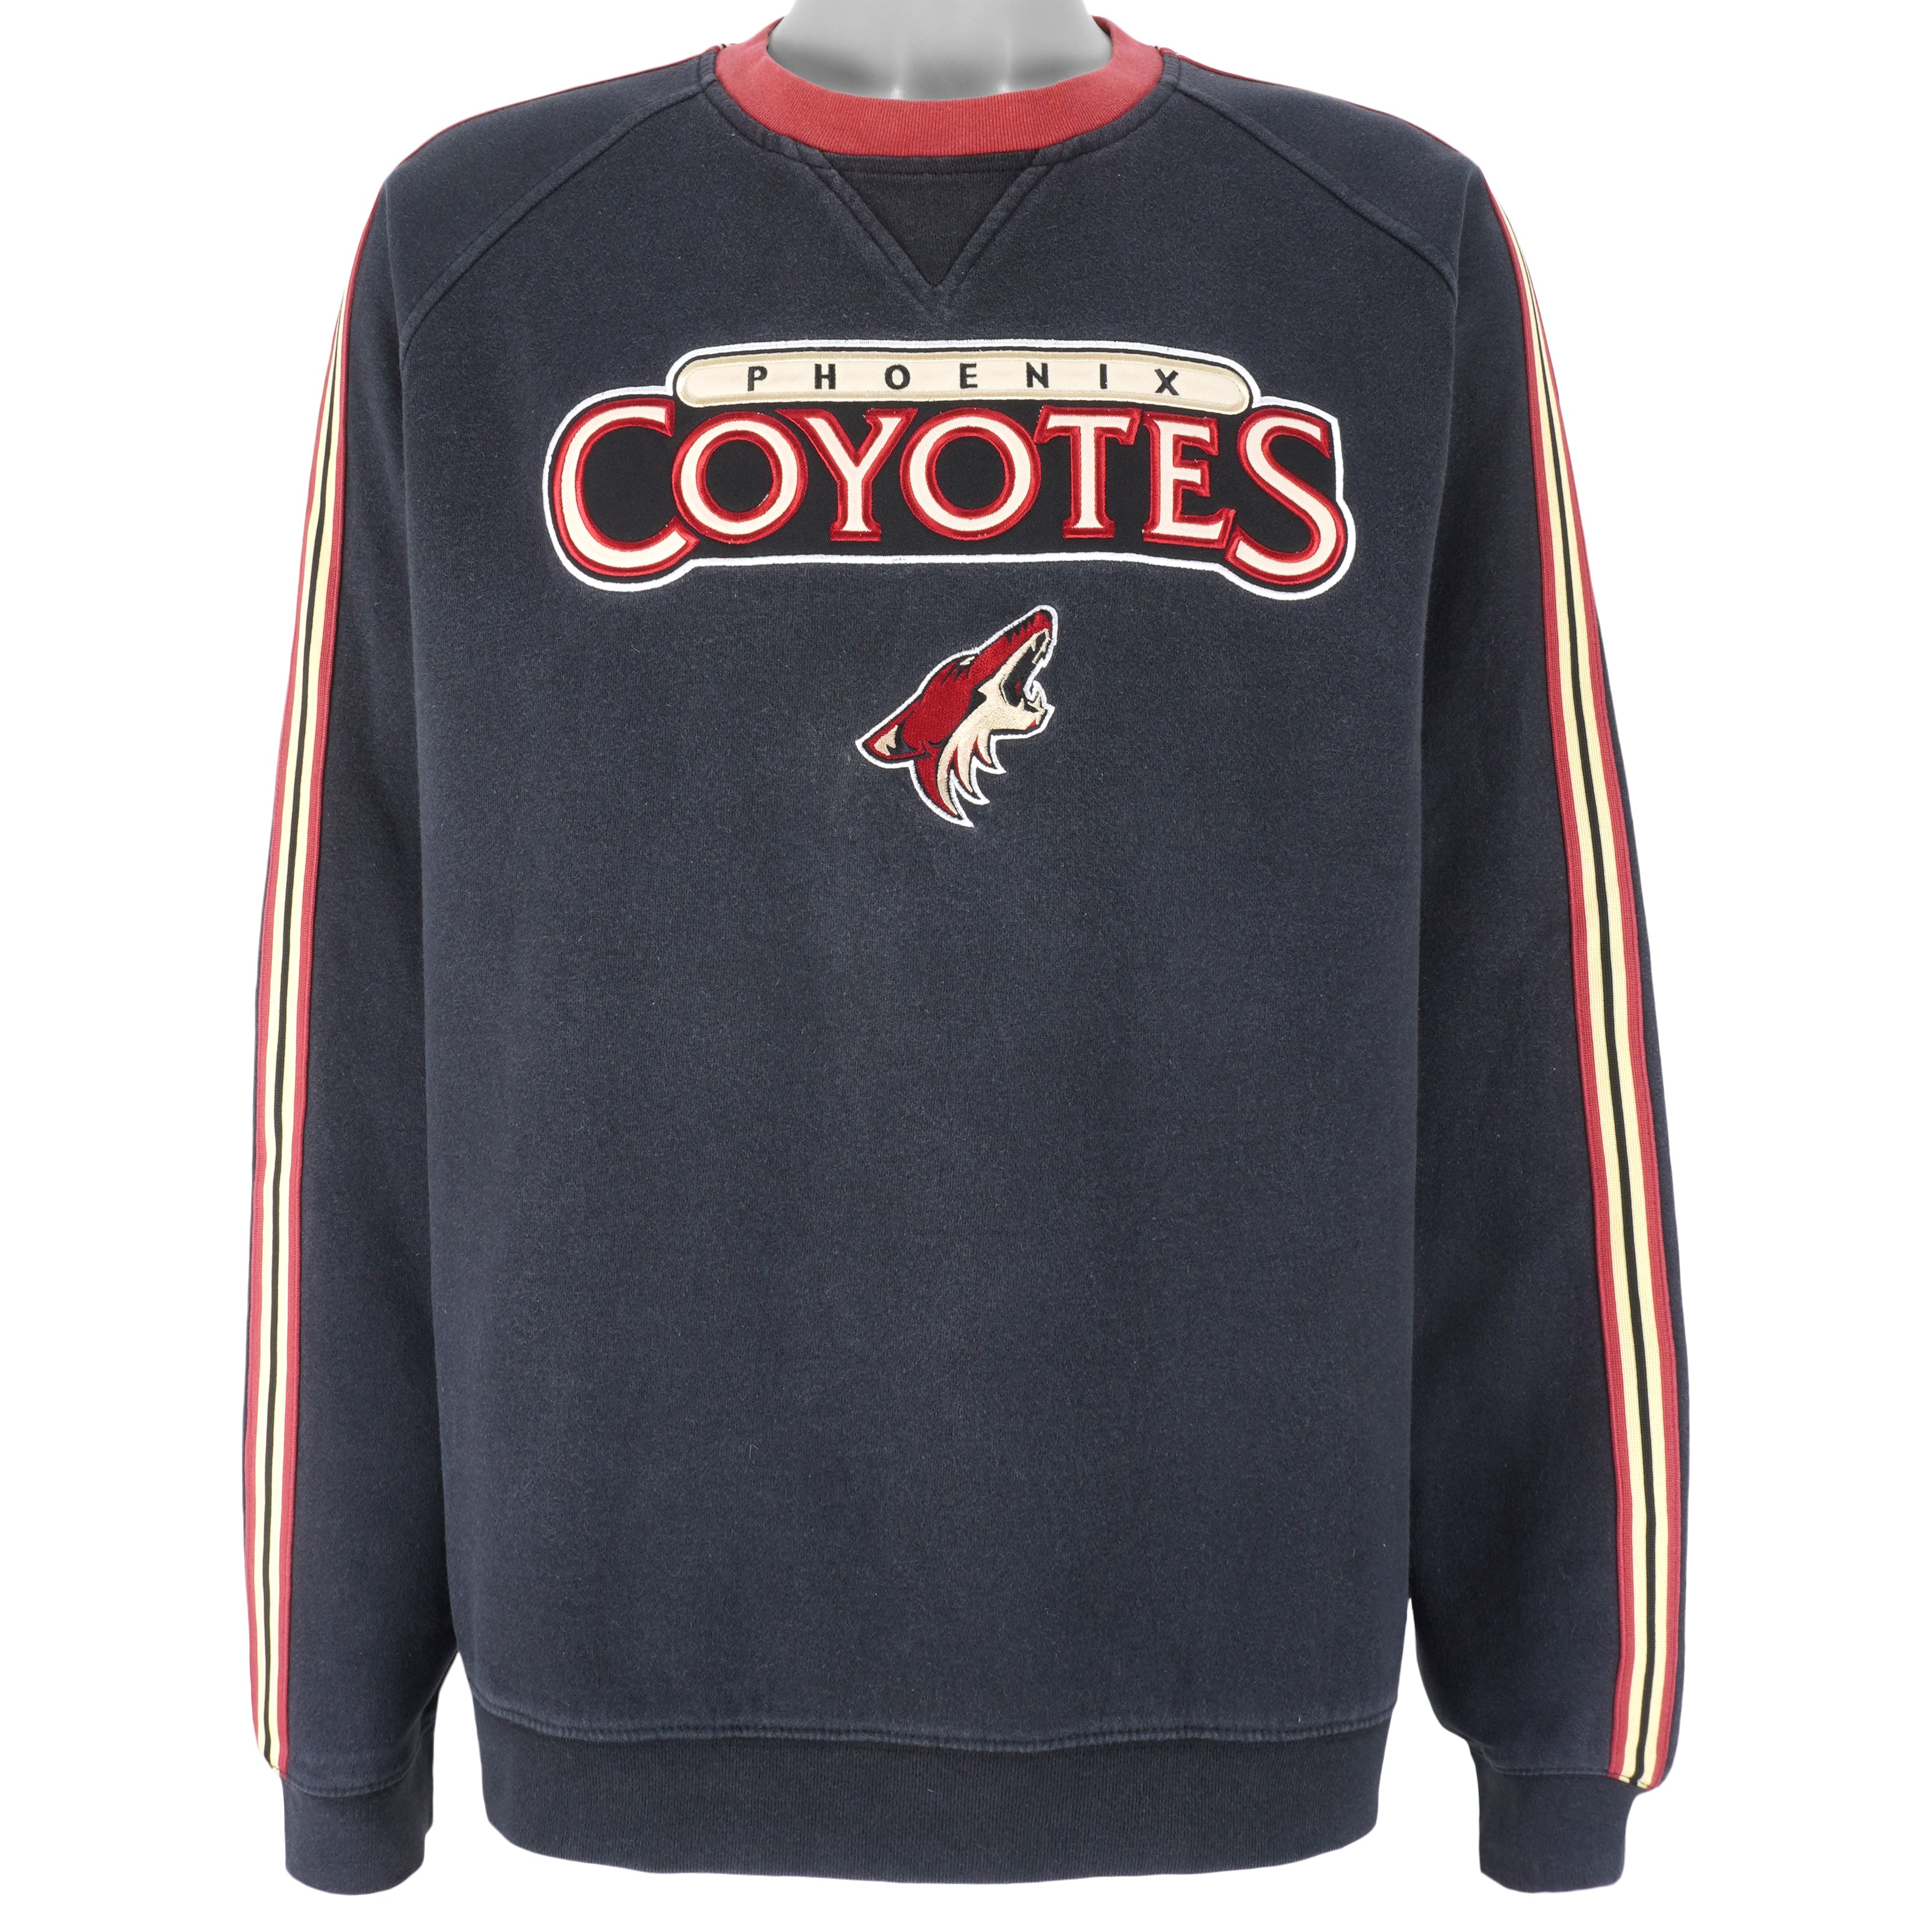 Vintage Reebok - Phoenix Coyotes Crew Neck Sweatshirt 2000s Large